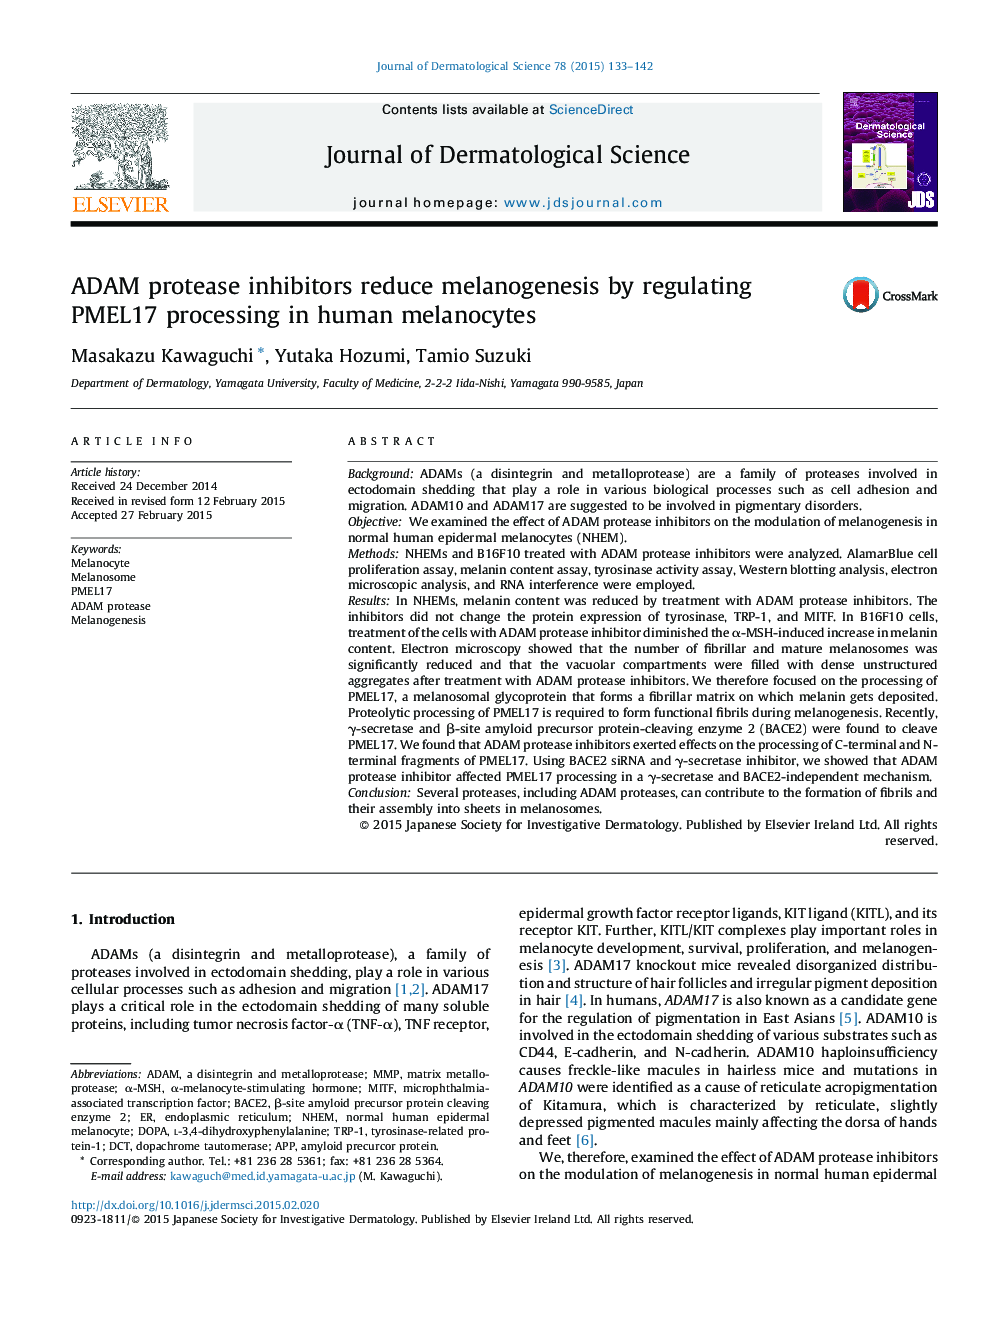 ADAM protease inhibitors reduce melanogenesis by regulating PMEL17 processing in human melanocytes